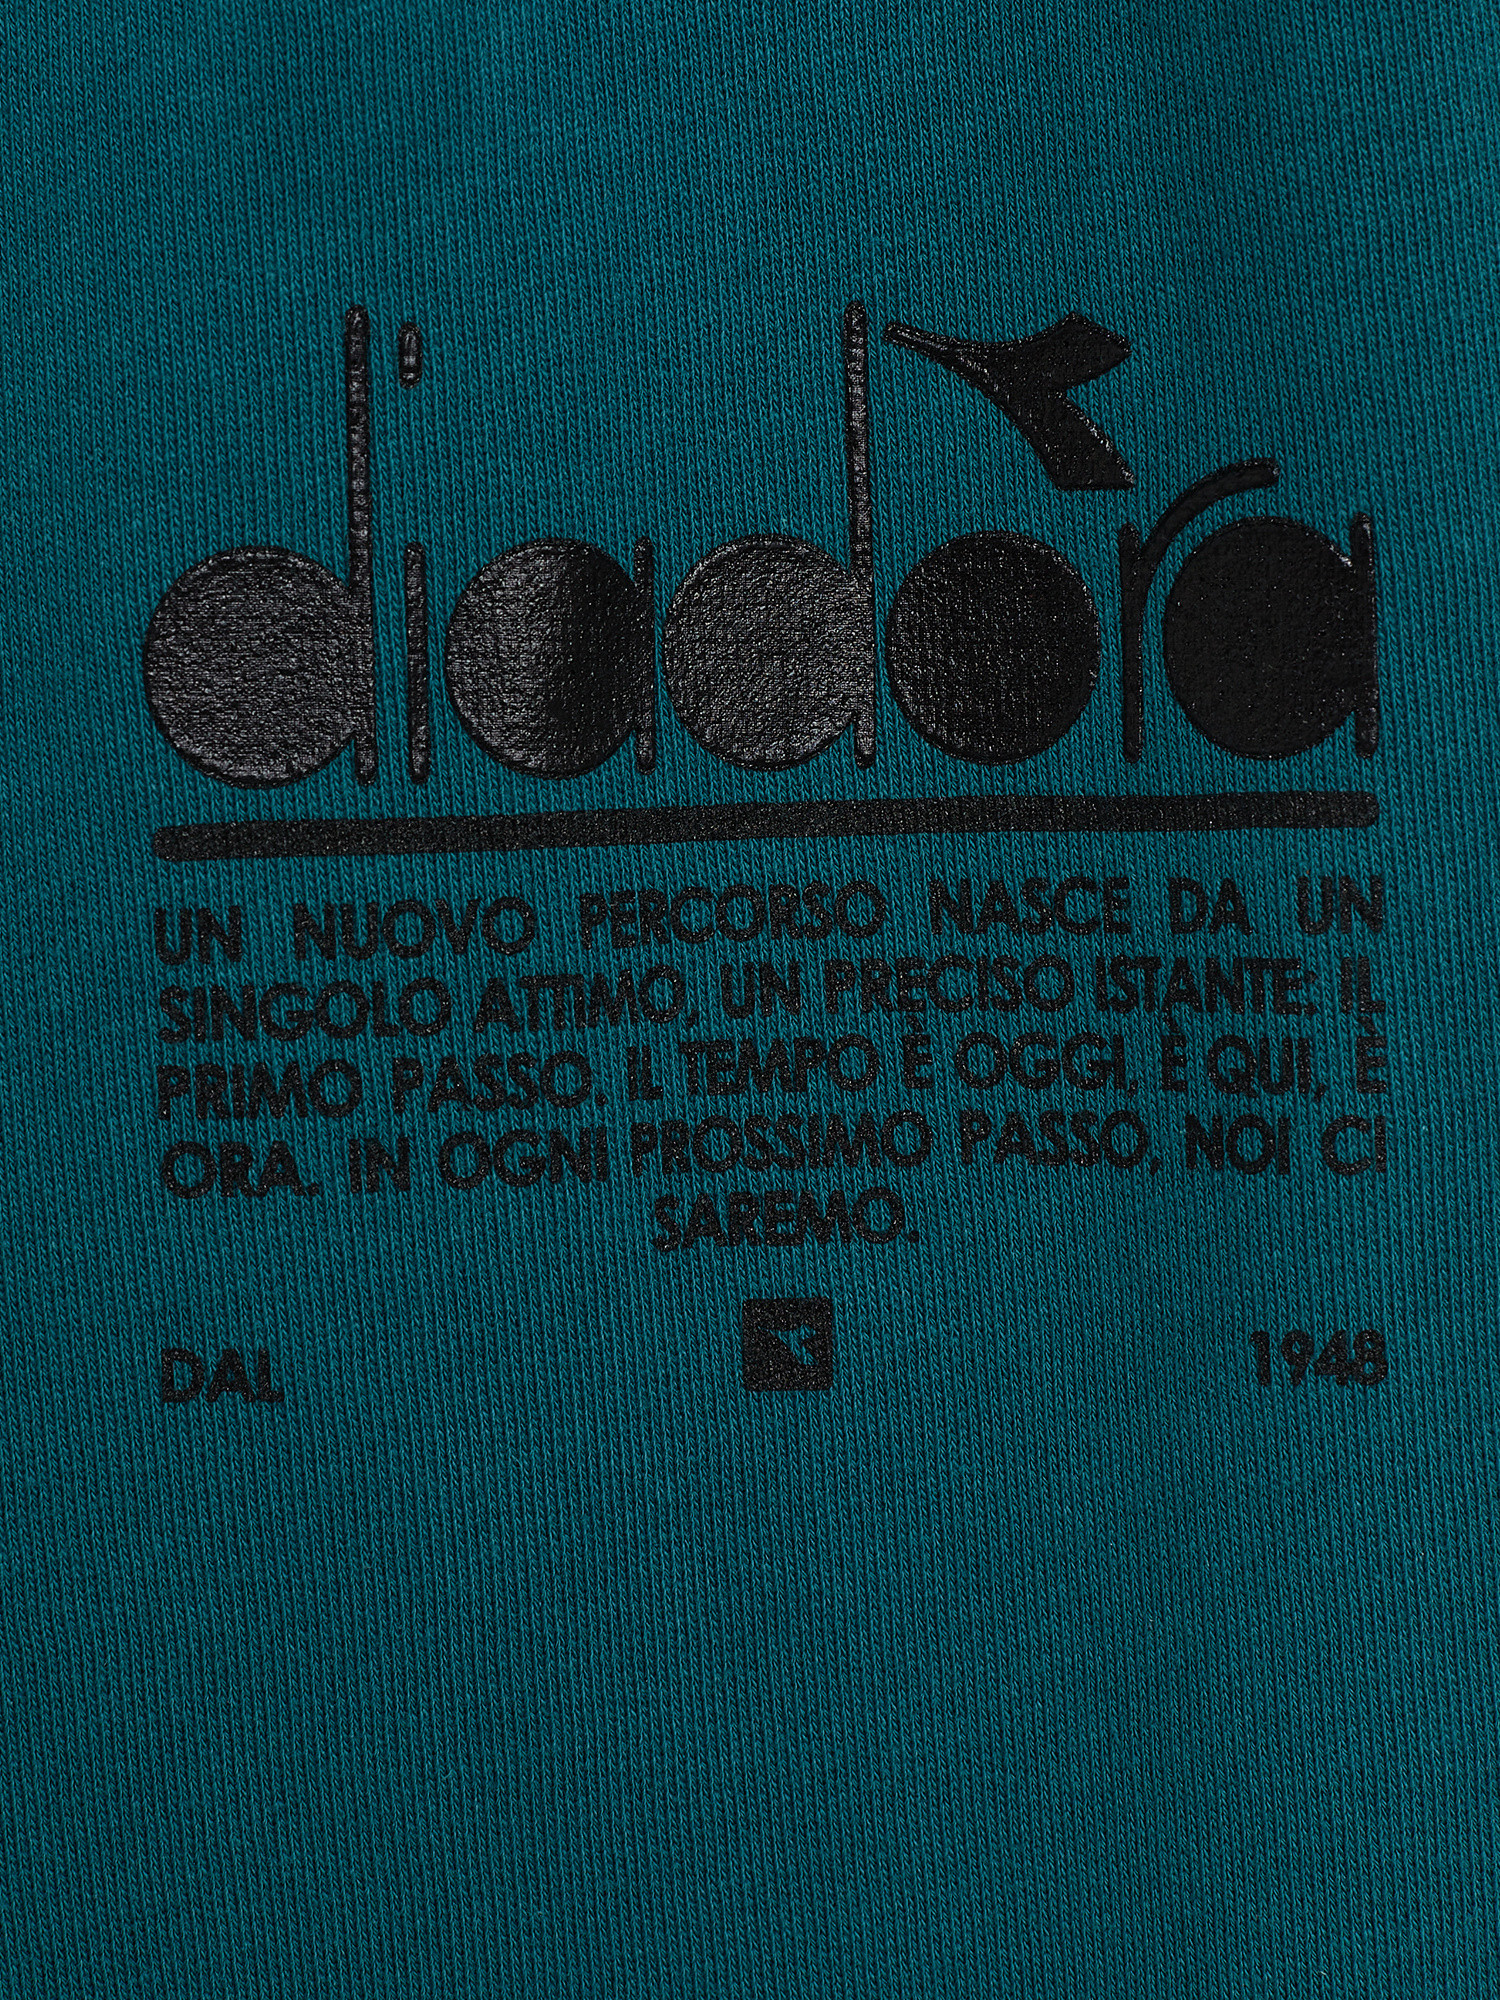 Diadora - Pantalone Manifesto sportivo con stampa in cotone, Petrolio, large image number 1